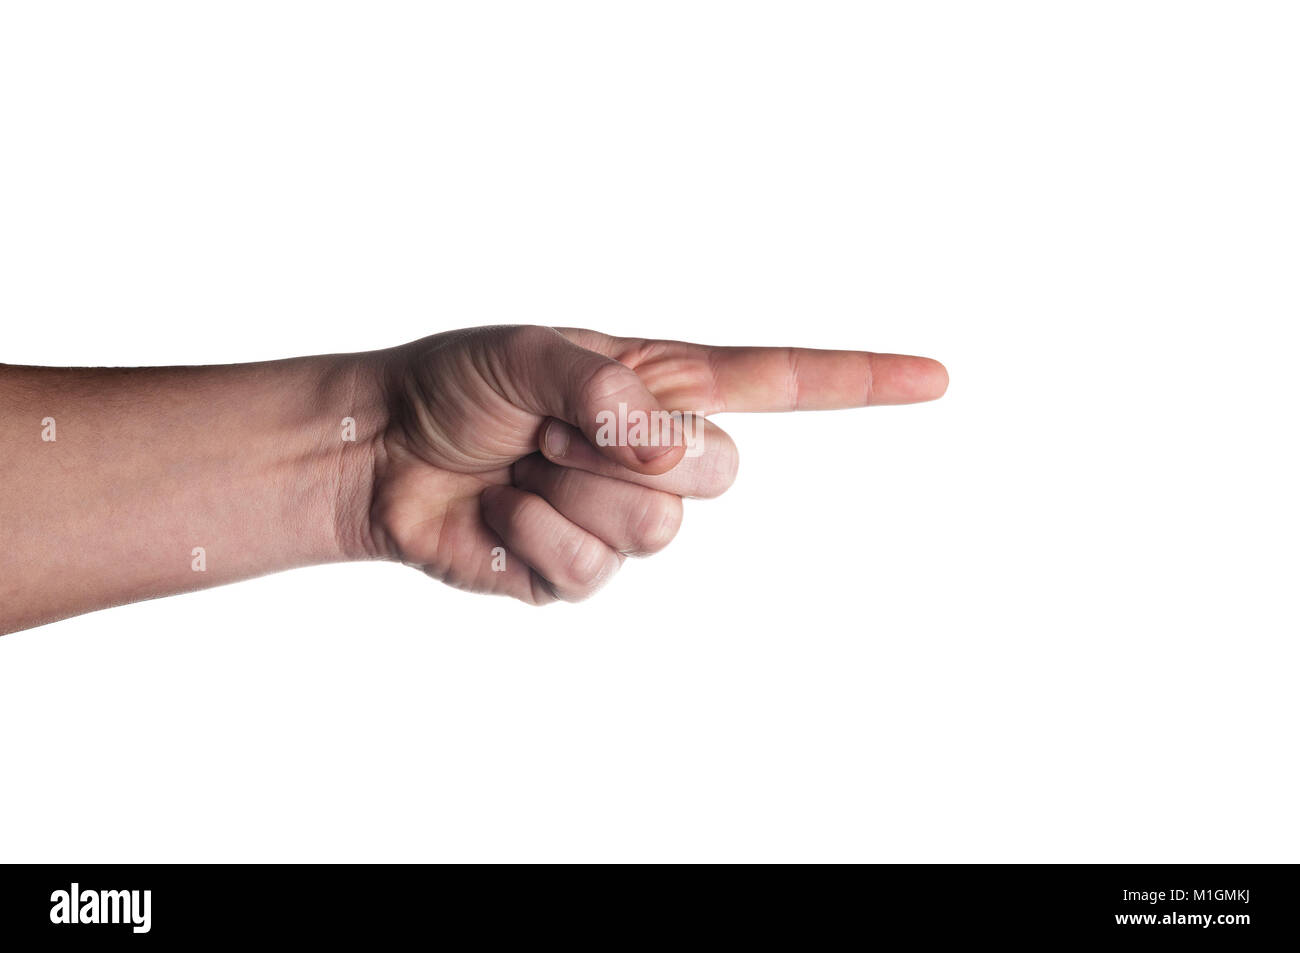 Pointing index finger isolated on white background Stock Photo